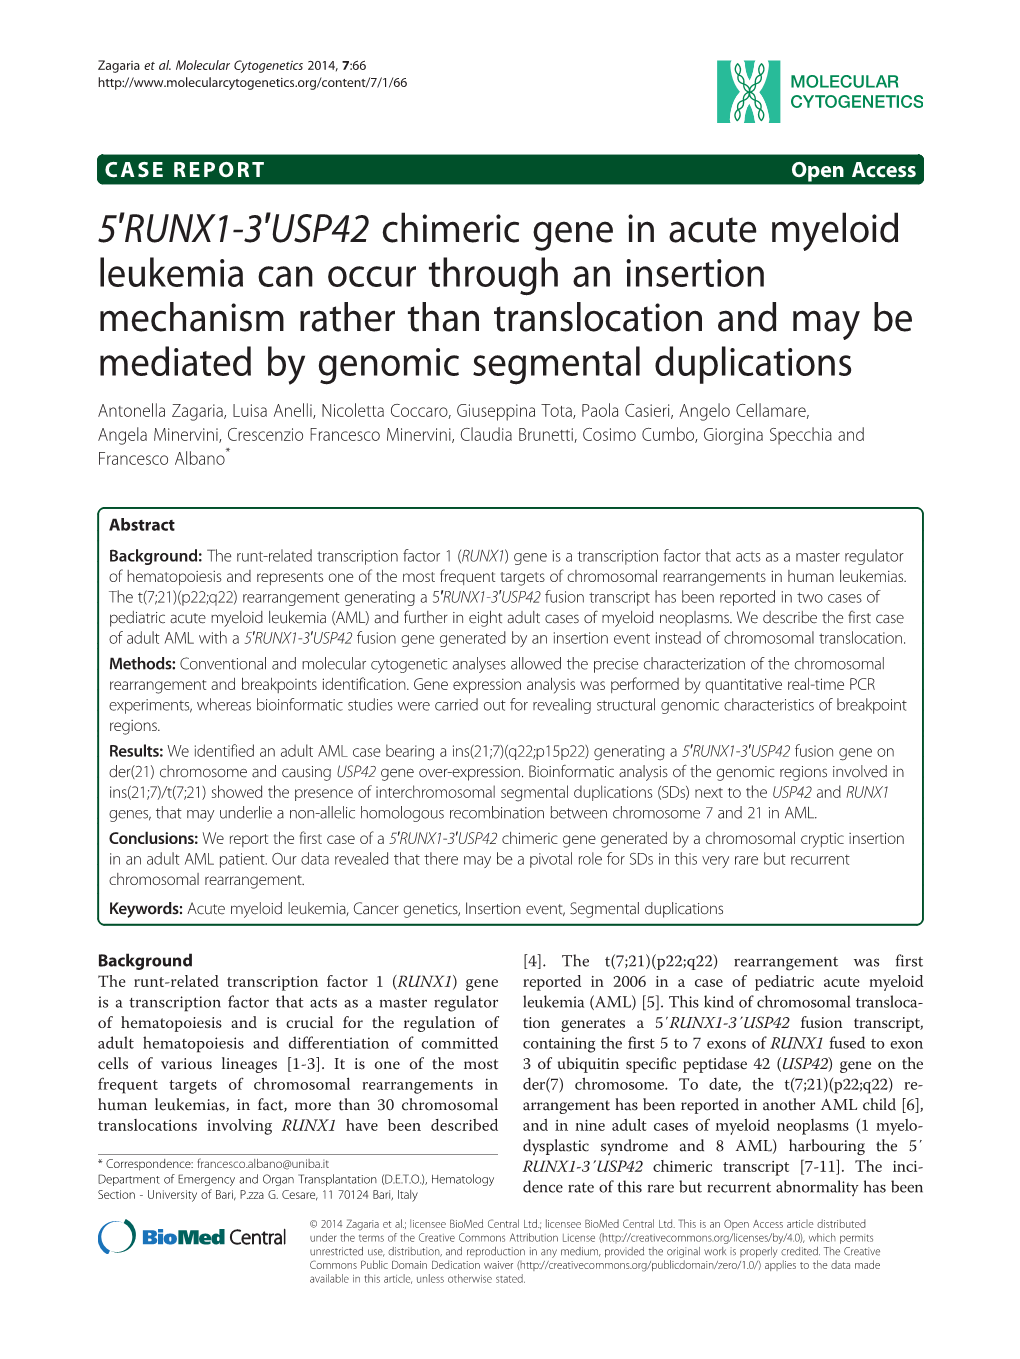 5'RUNX1-3'USP42 Chimeric Gene in Acute Myeloid Leukemia Can Occur